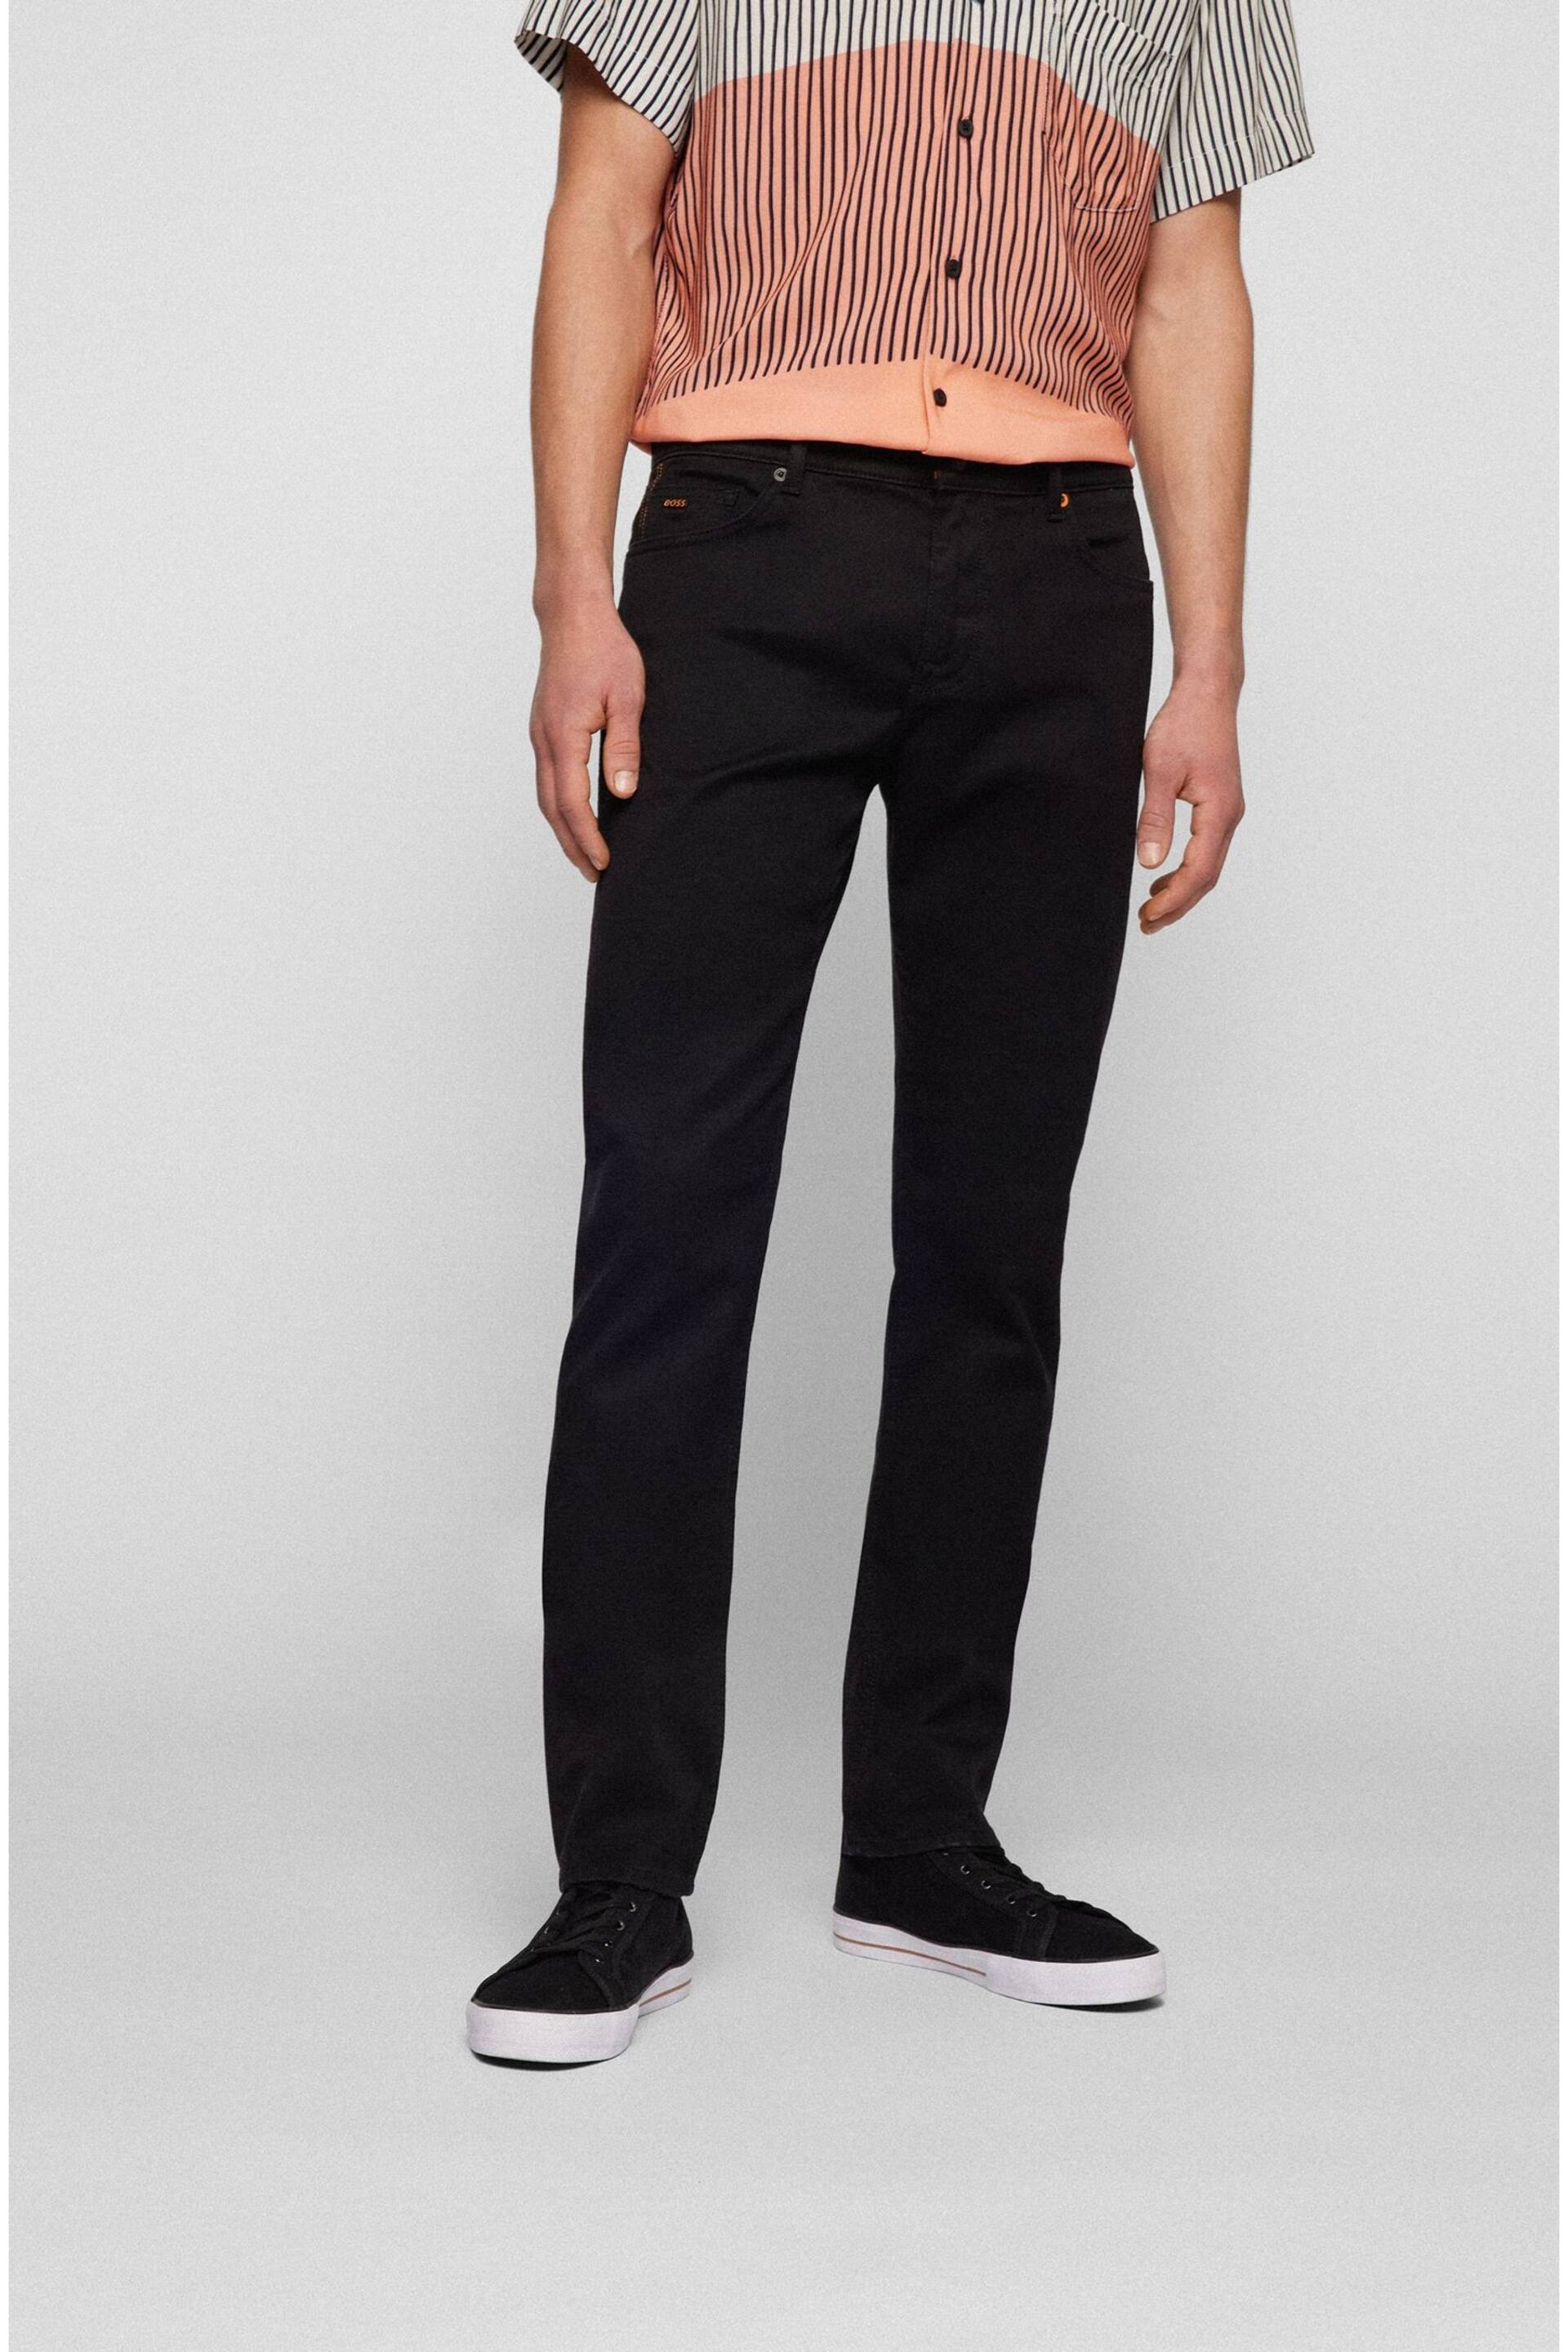 BOSS Black Slim Fit Comfort Stretch Denim Jeans - Image 1 of 5